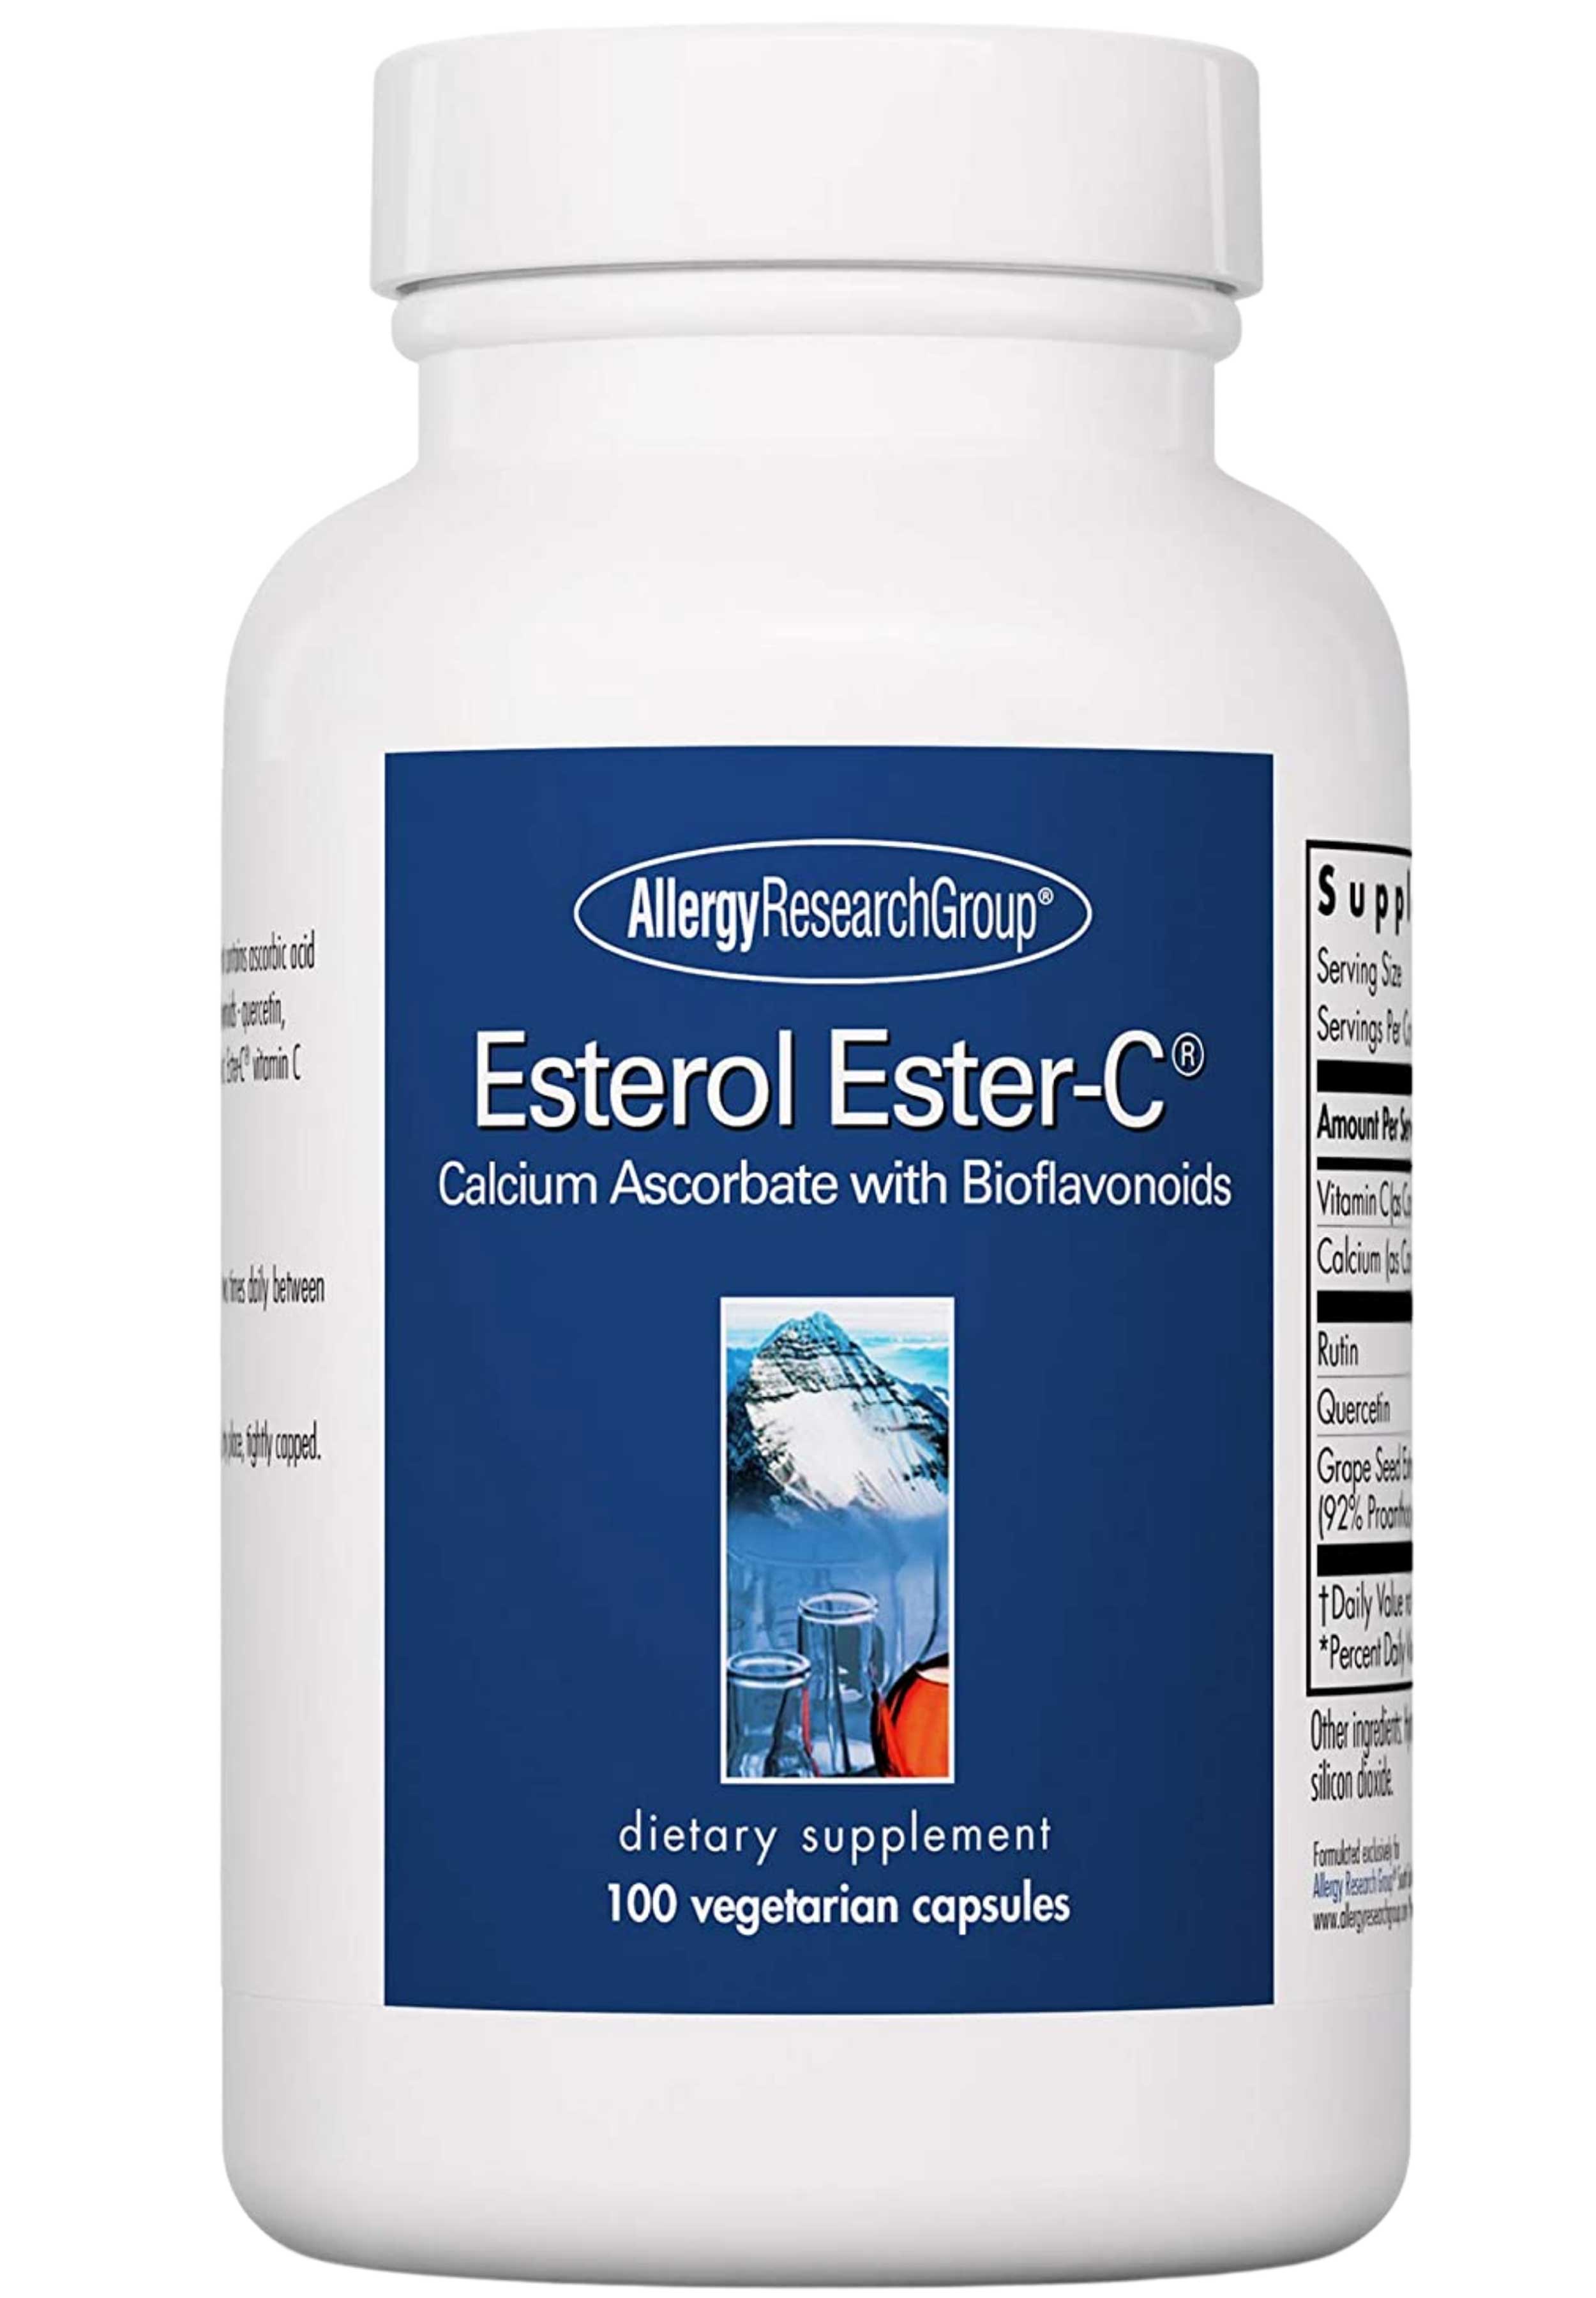 Allergy Research Group Esterol Ester-C